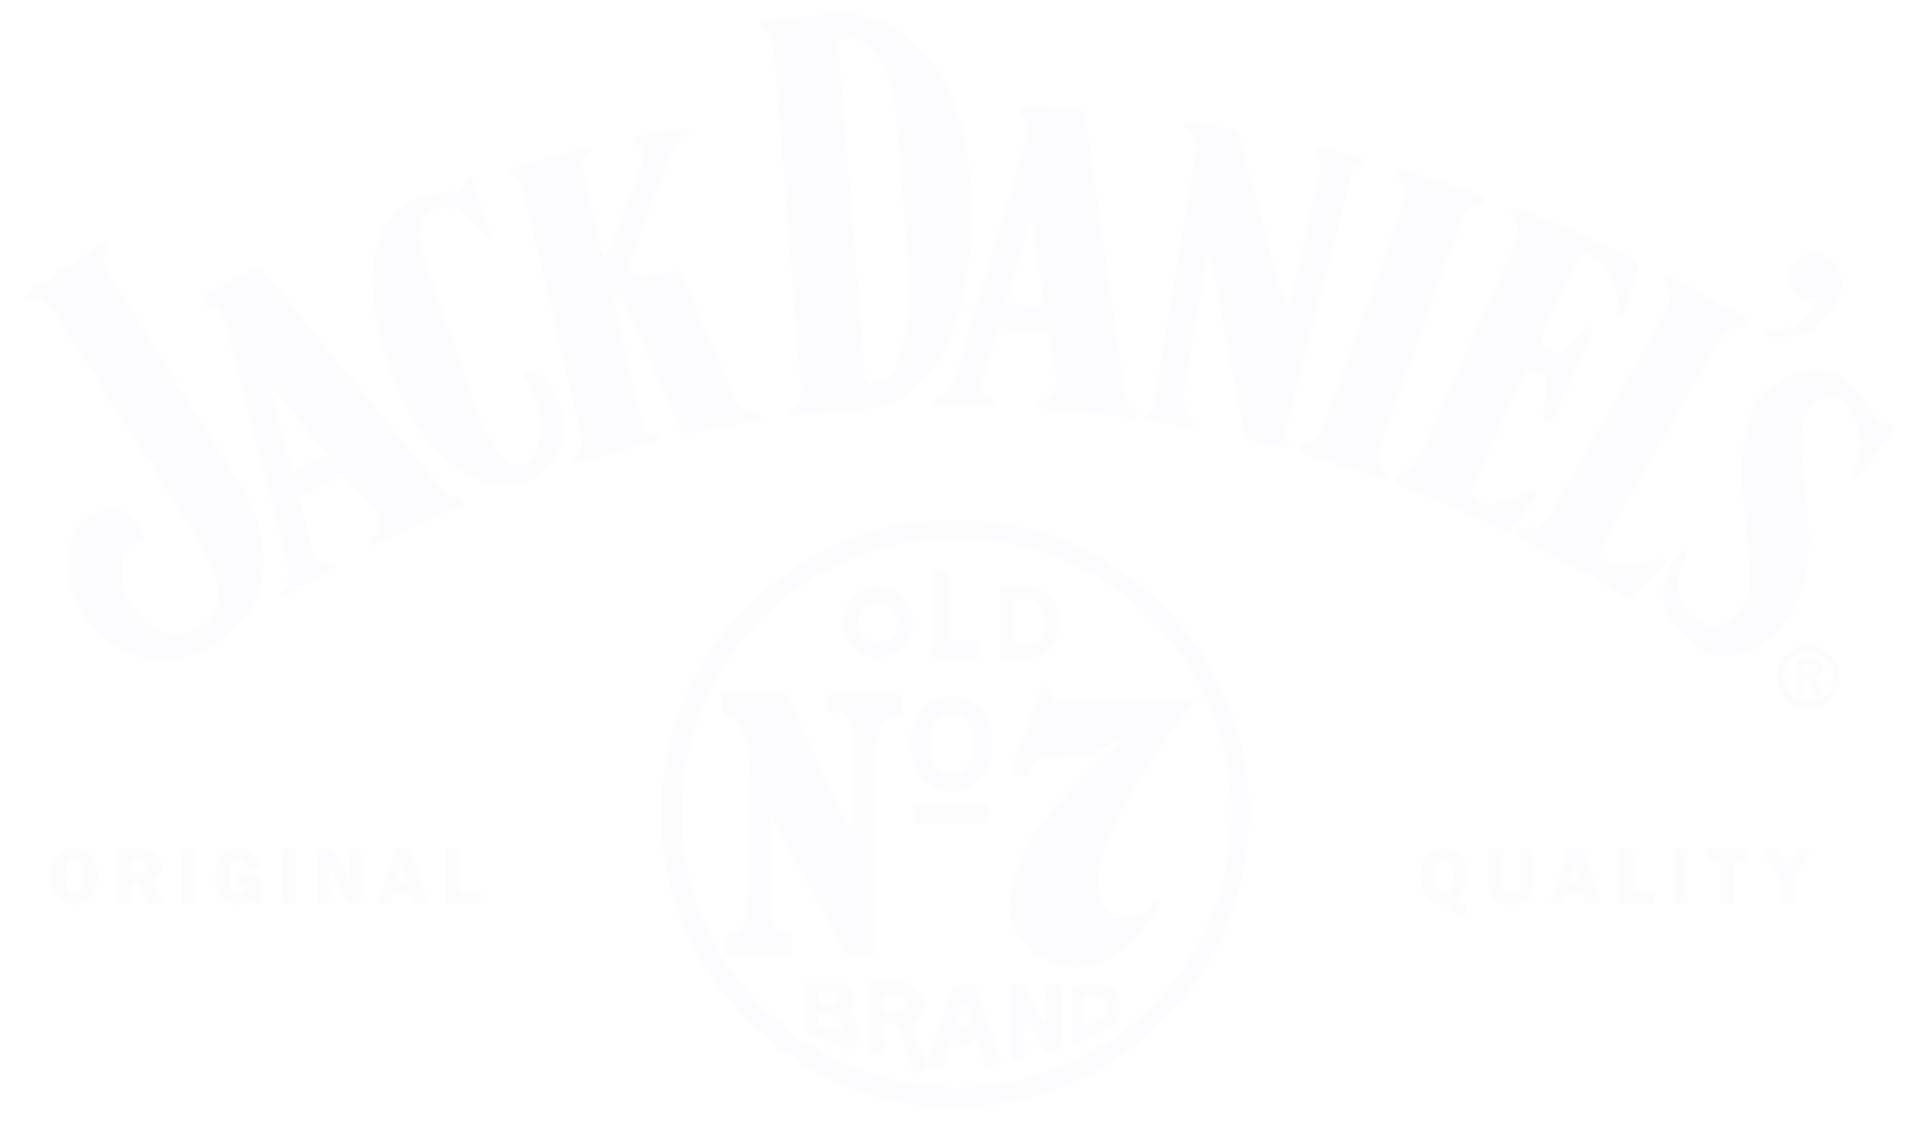 Jack Daniels Old No 7 Brand logo